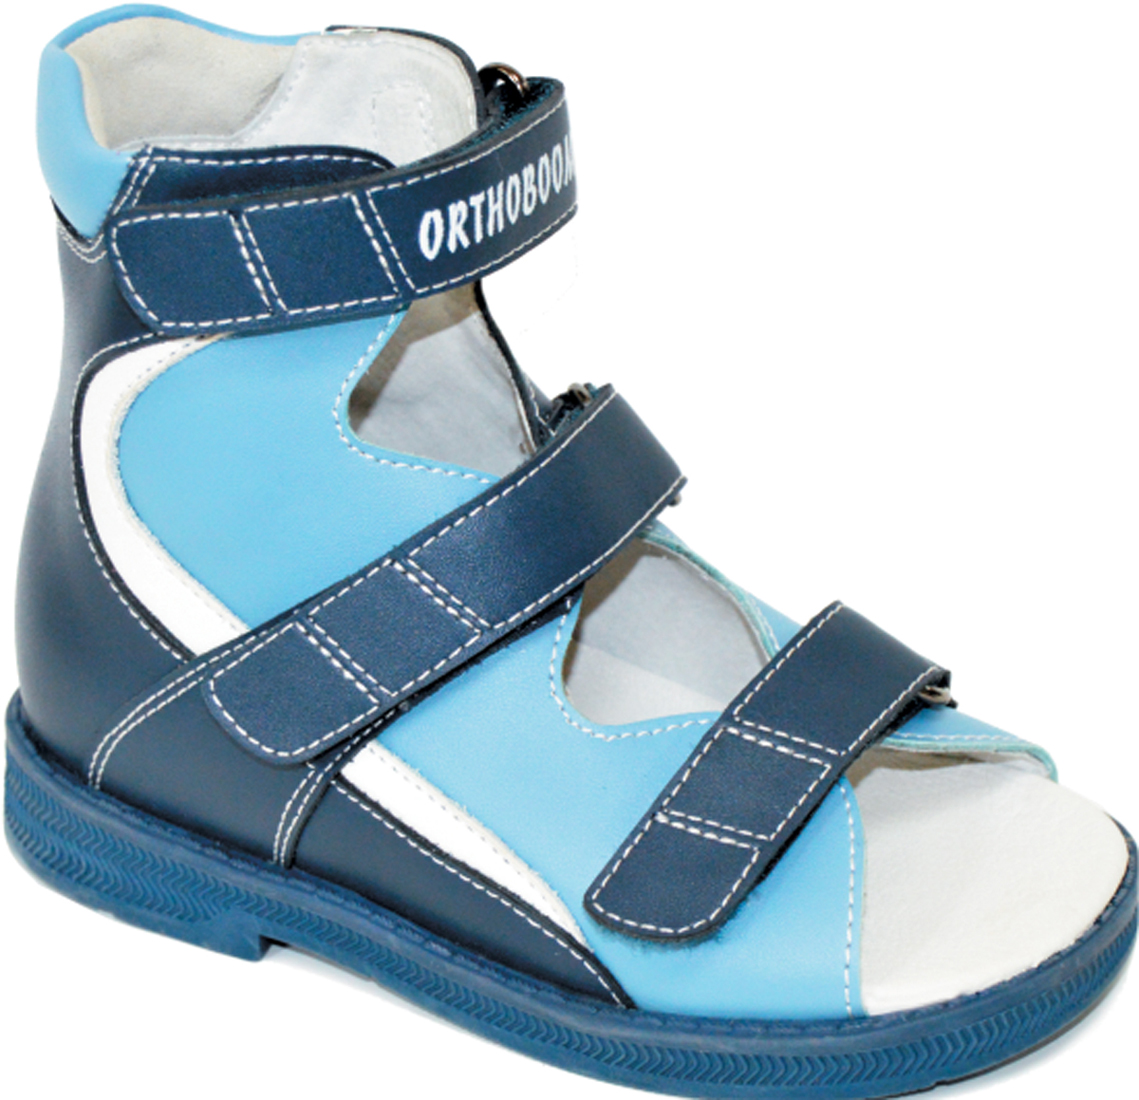 Сандалии для мальчика Orthoboom, цвет: темно-синий-голубой-белый. 71597-33. Размер 30